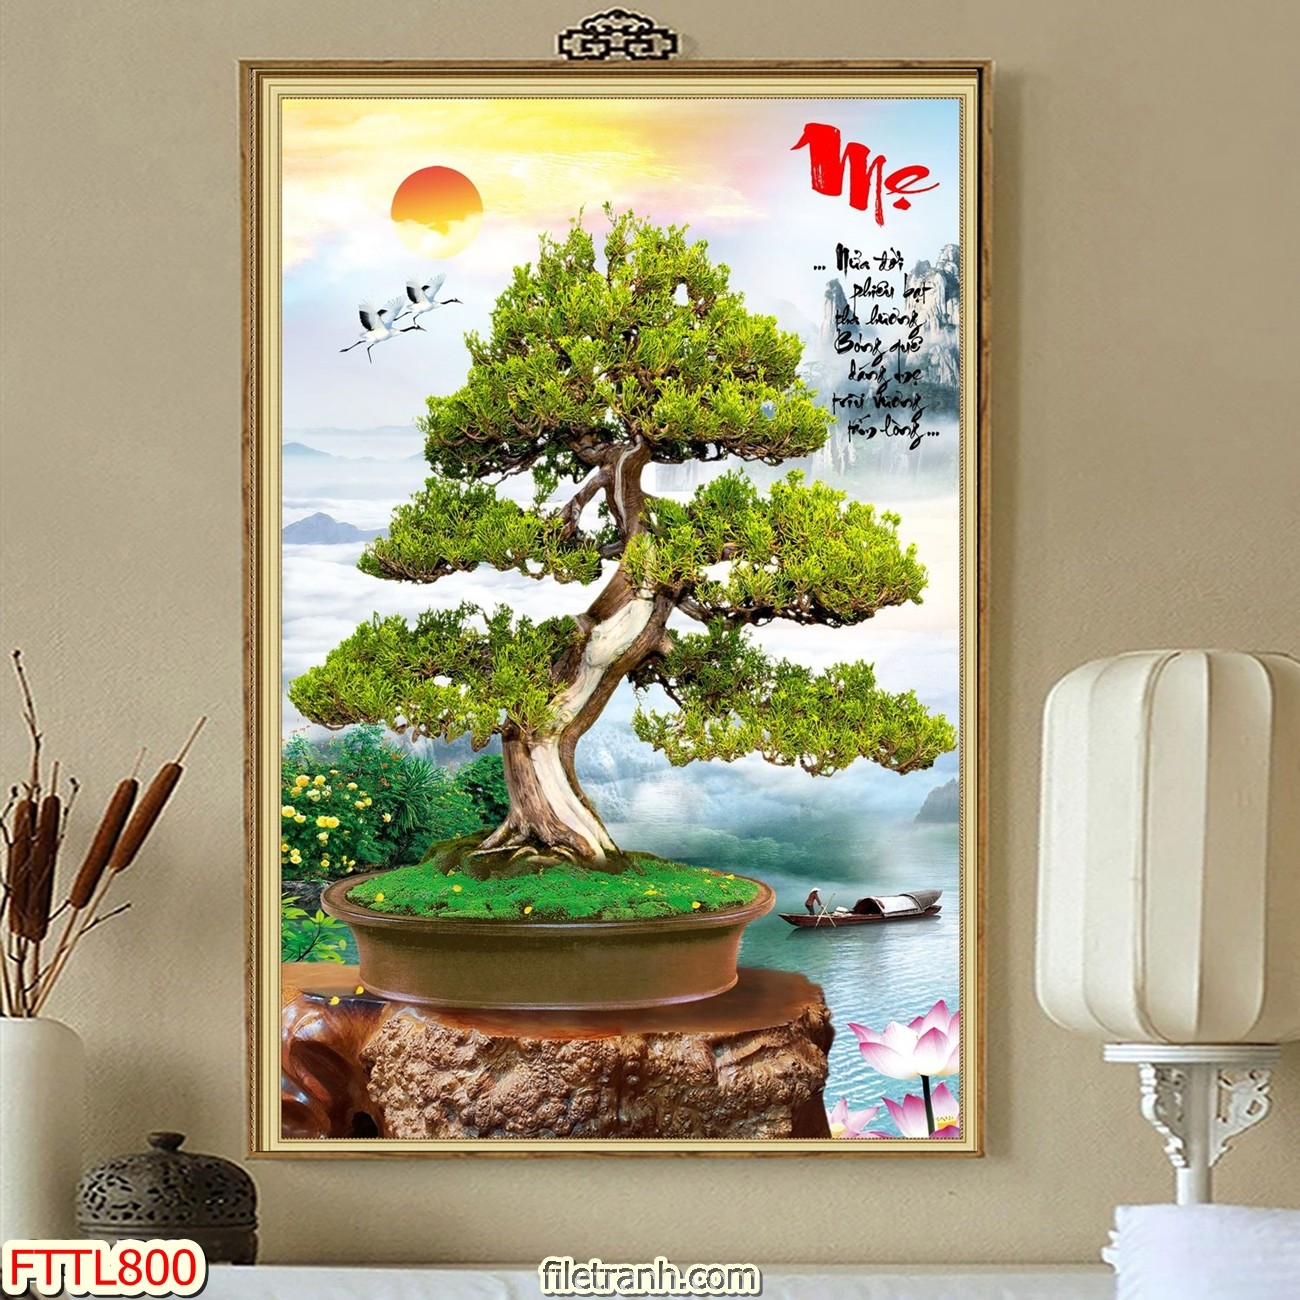 https://filetranh.com/file-tranh-chau-mai-bonsai/file-tranh-chau-mai-bonsai-fttl800.html